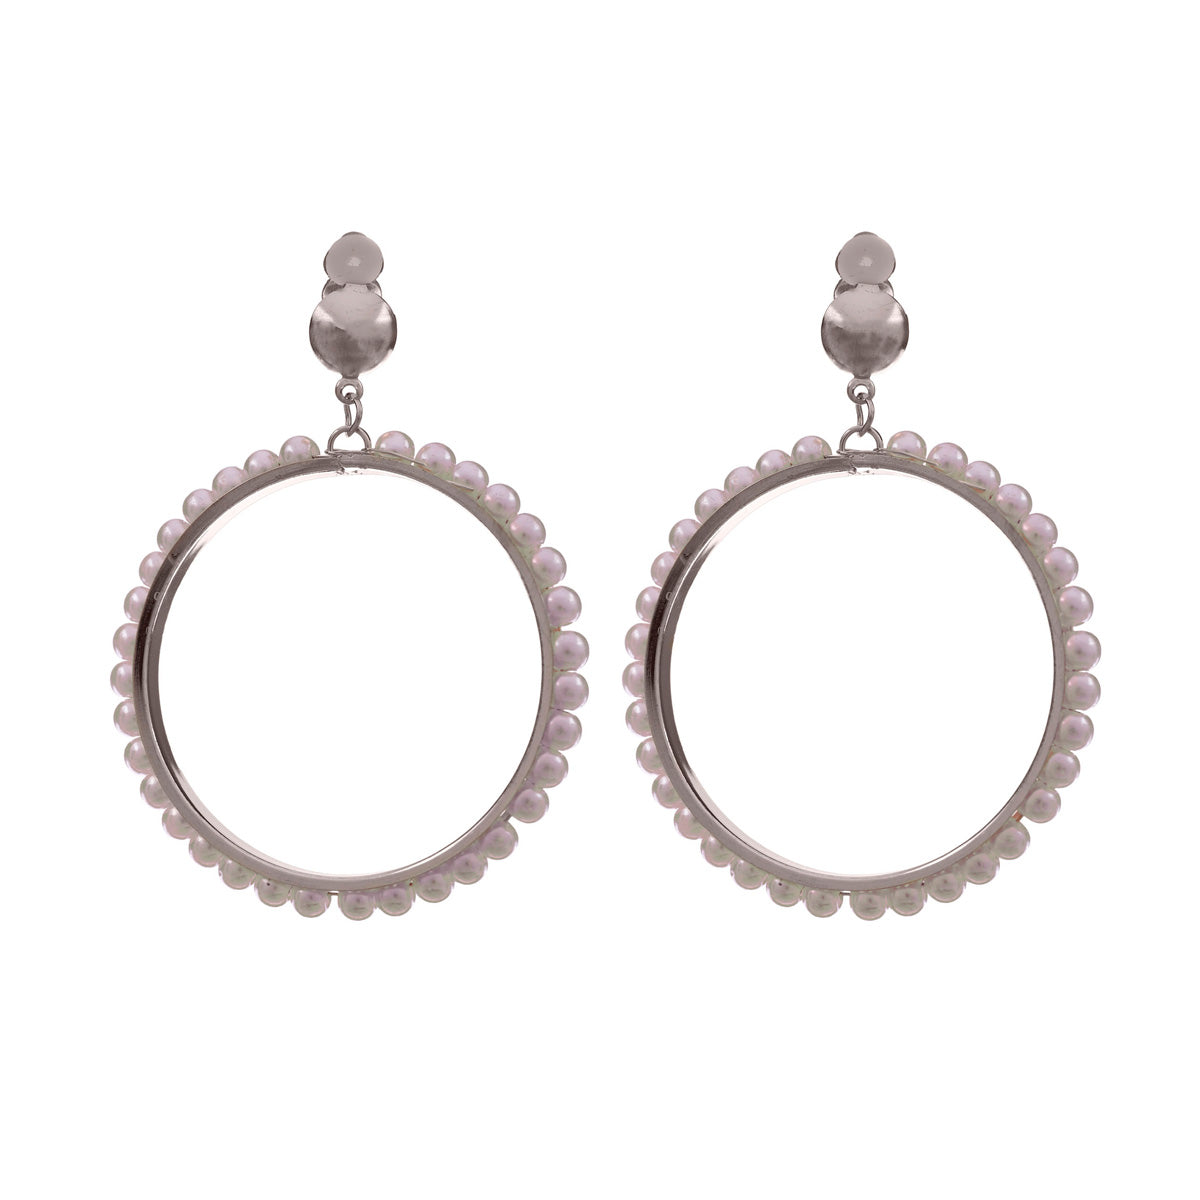 Hanging pearl ring clip earrings